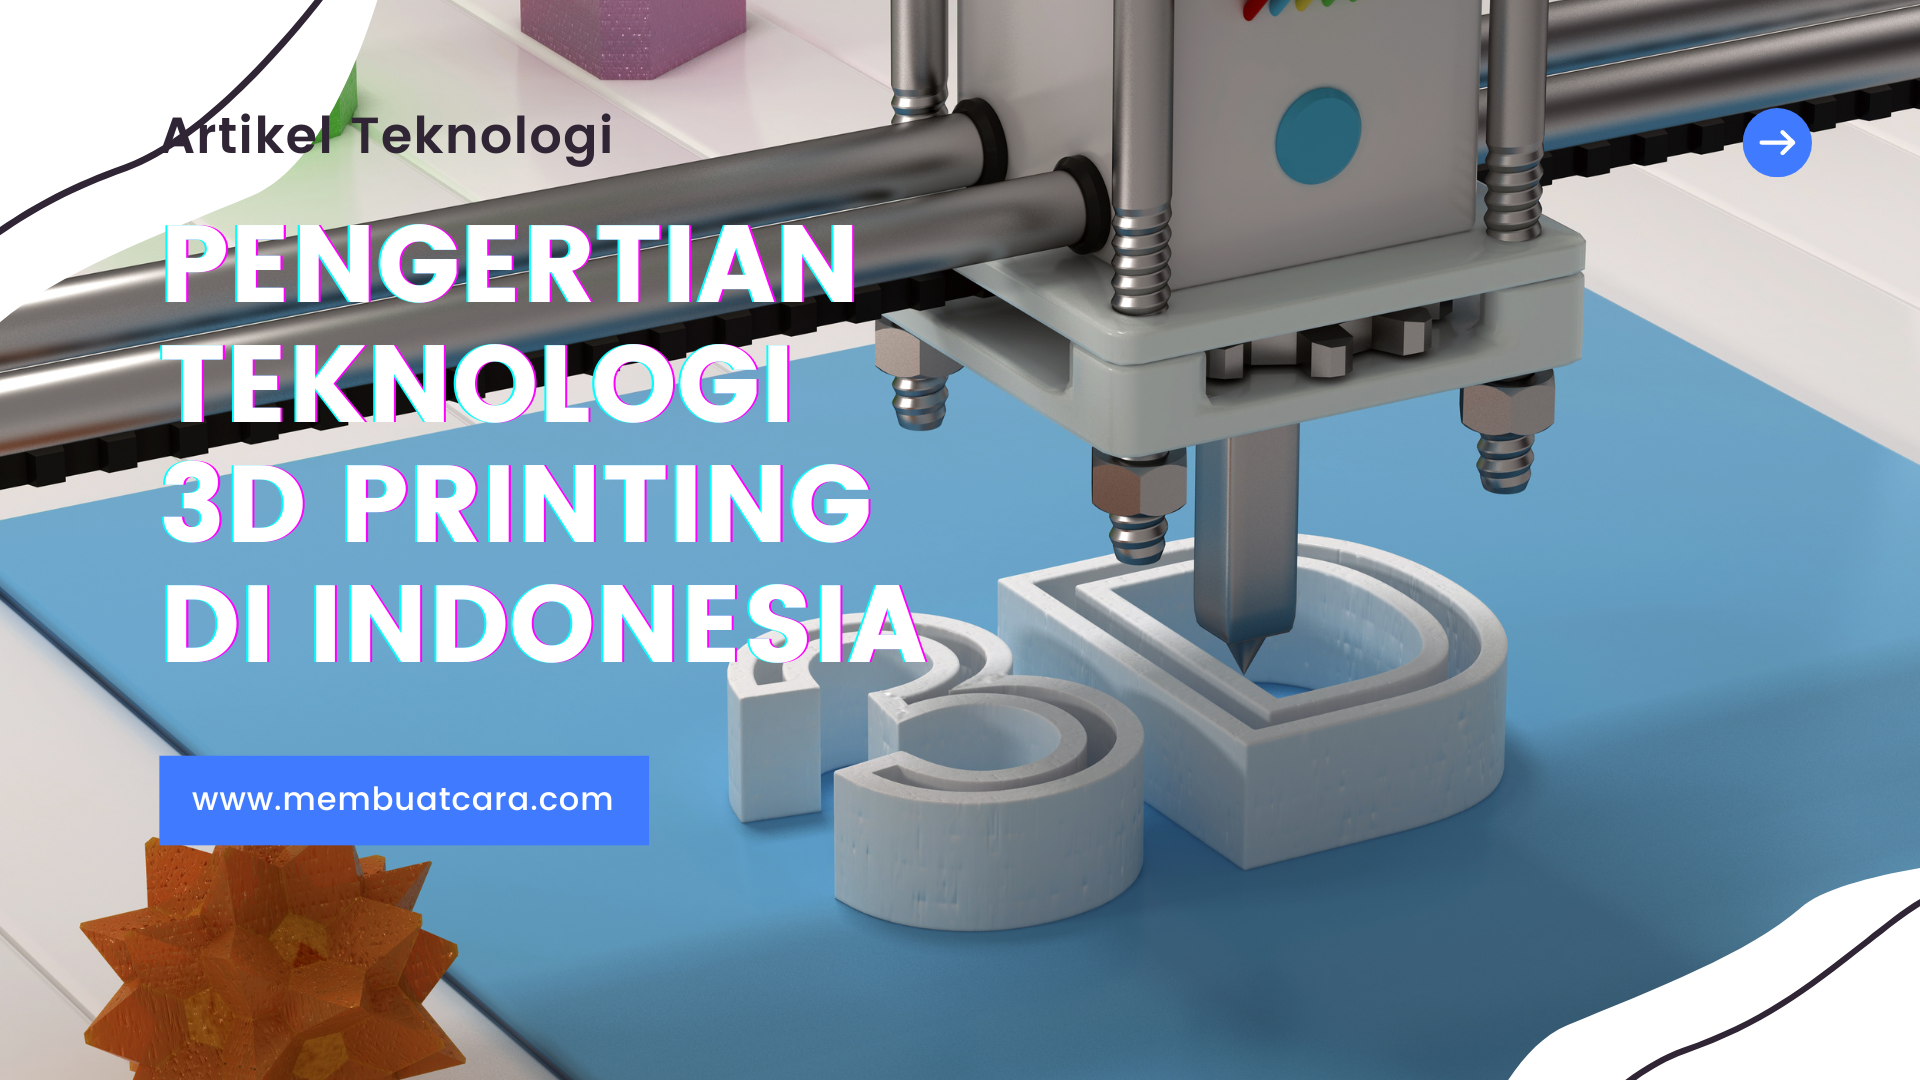 Pengertian, Contoh Aplikasi dan Perkembangan Teknologi 3D Printing Di Indonesia